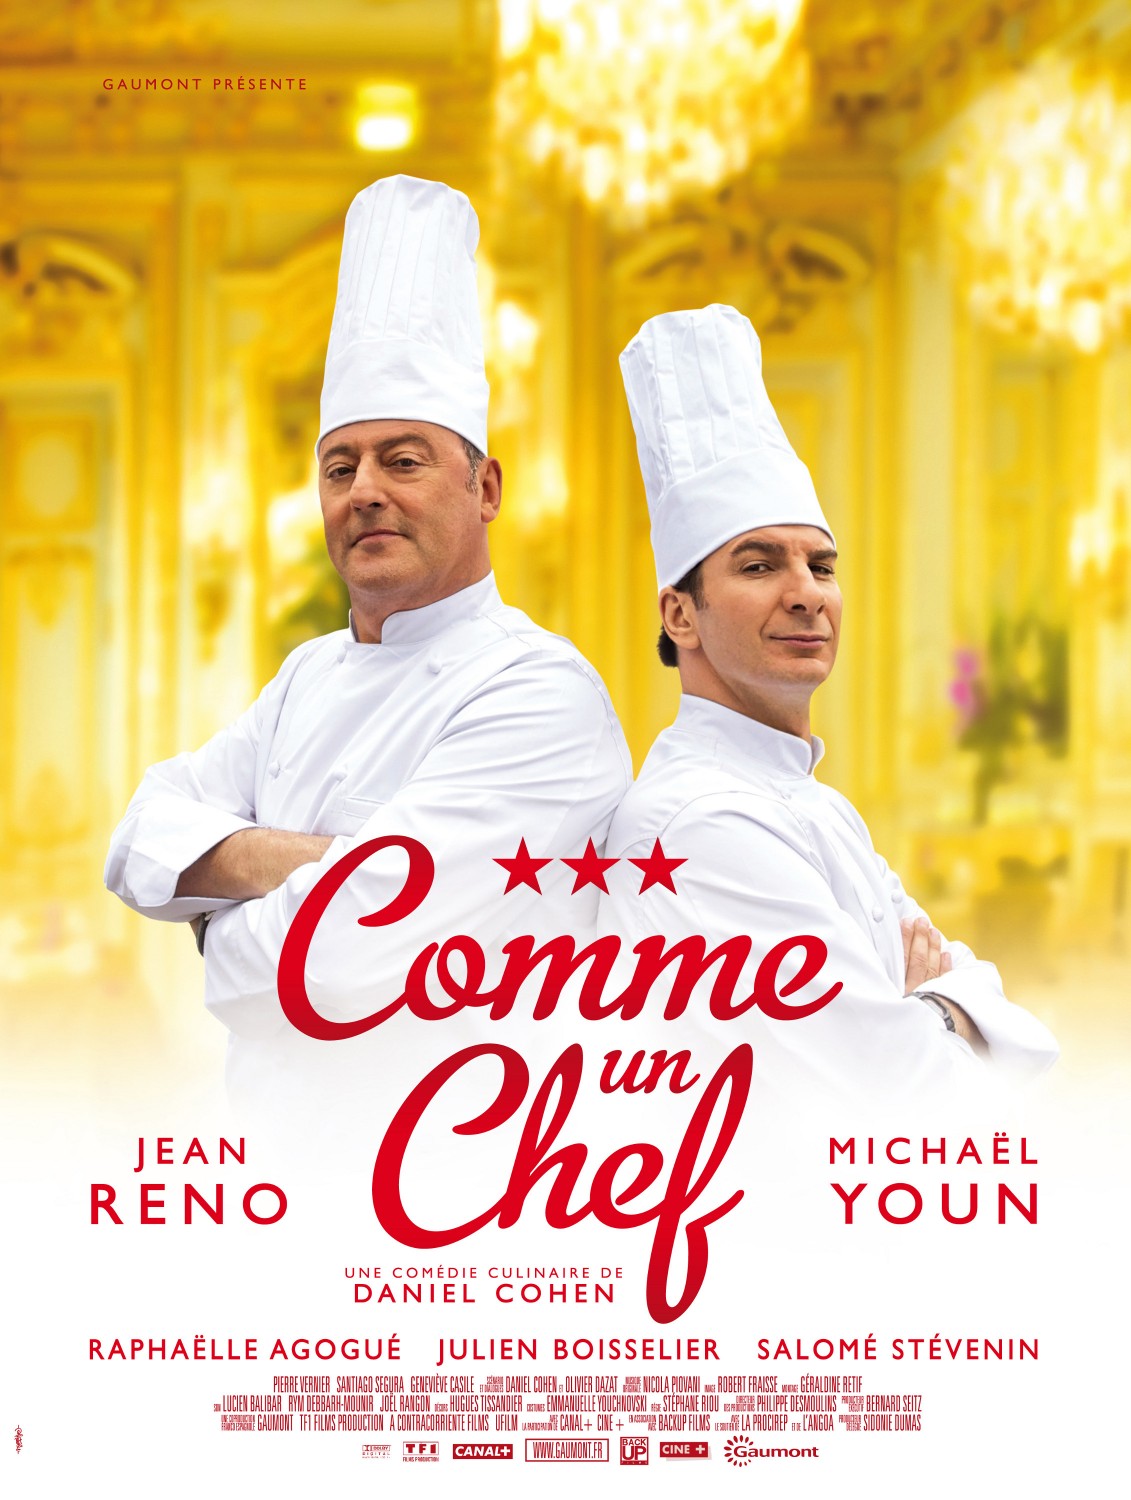 Šefas / Comme un chef / The Chef (2012)